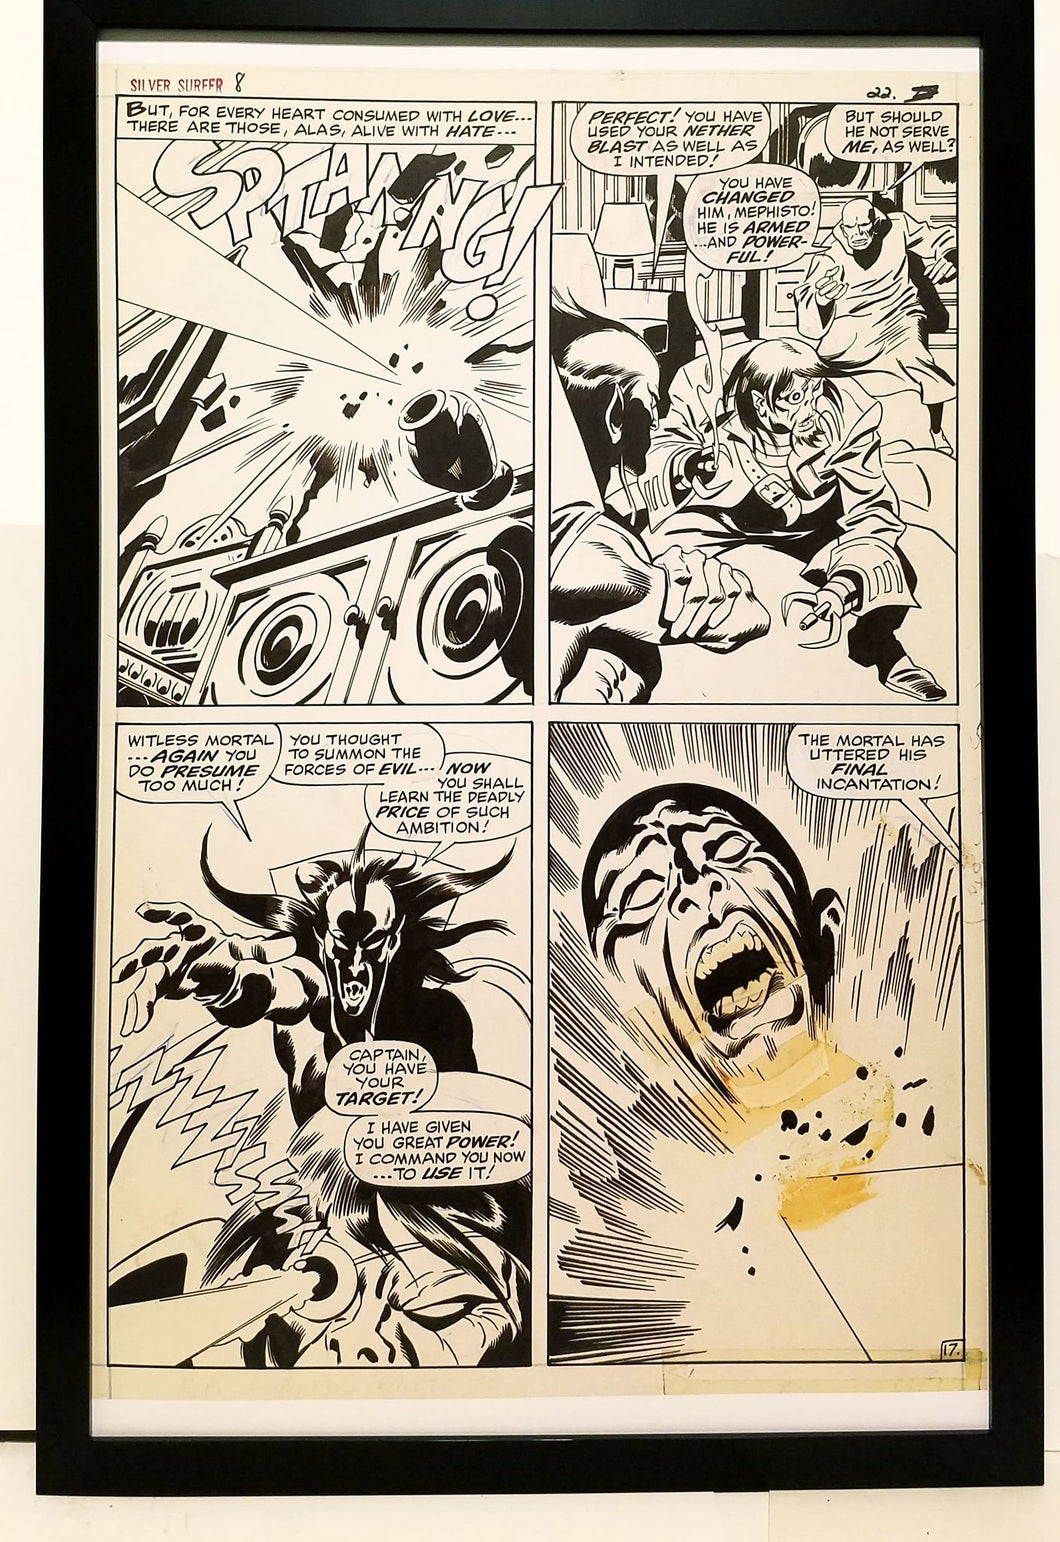 Silver Surfer #8 pg. 17 w/ Mephisto 11x17 FRAMED Original Art Poster Marvel Comics